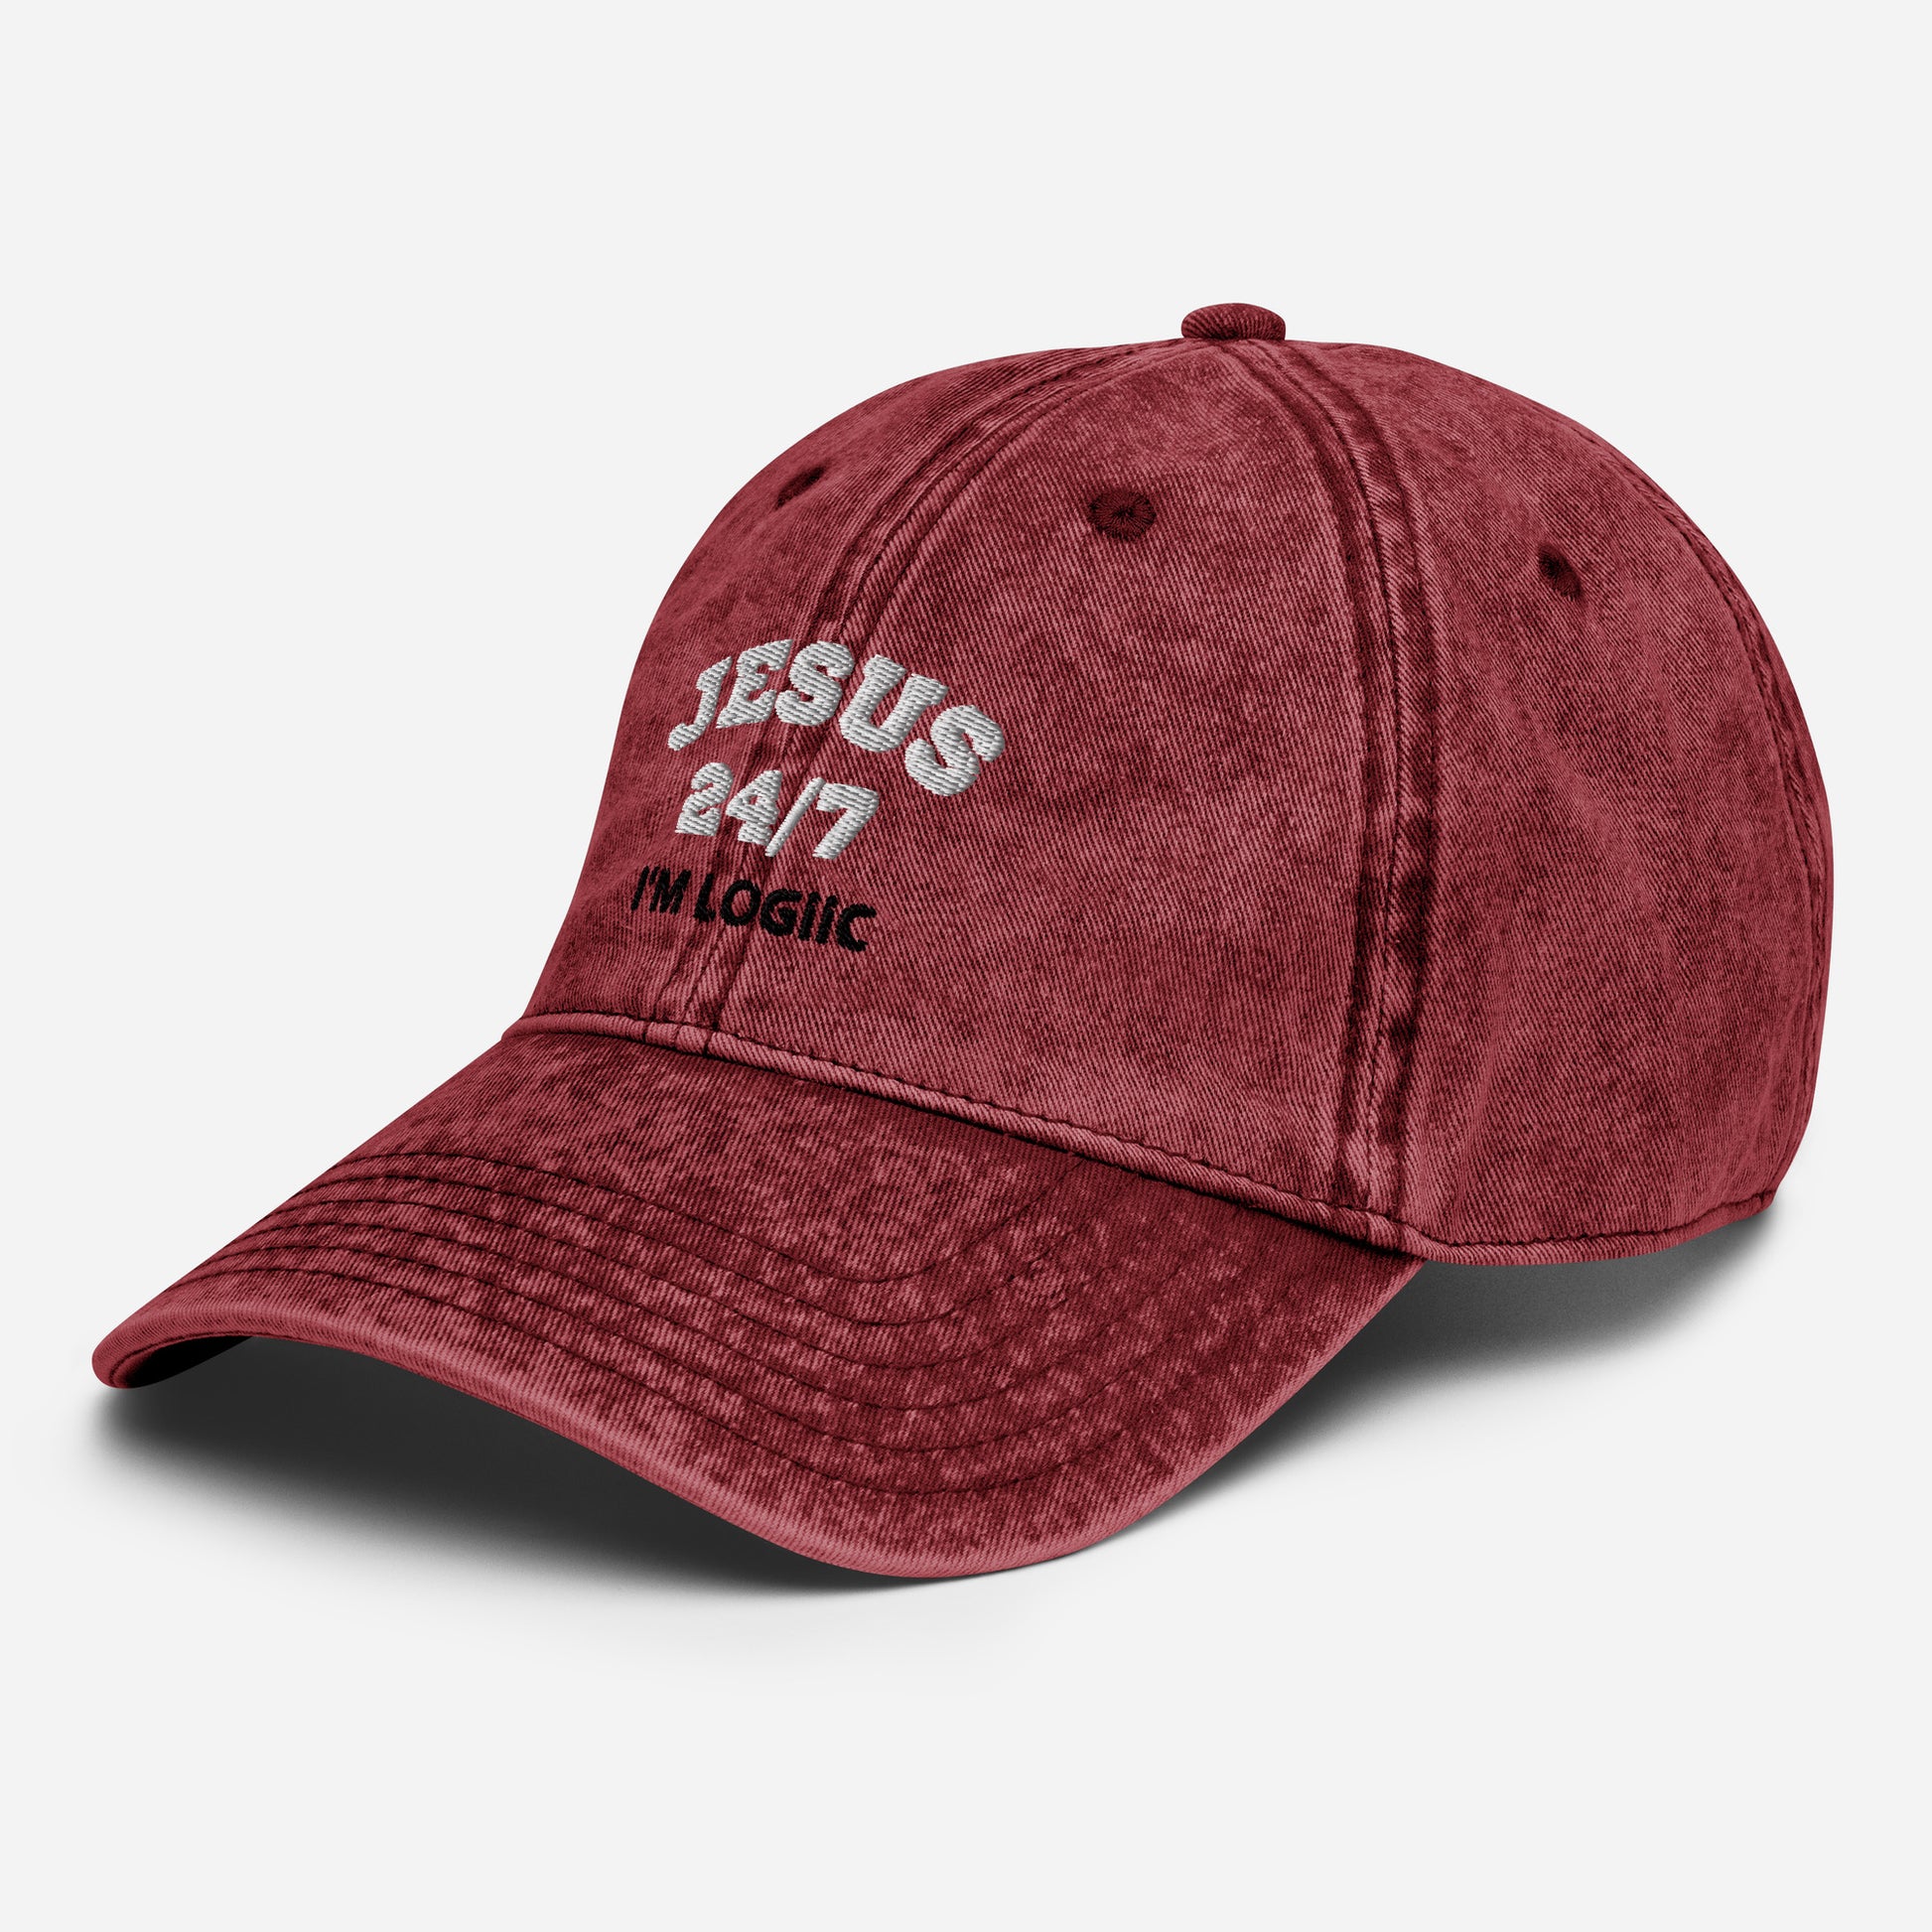 Jesus 24/7 Embroidery Vintage Cotton Twill Cap - Hats